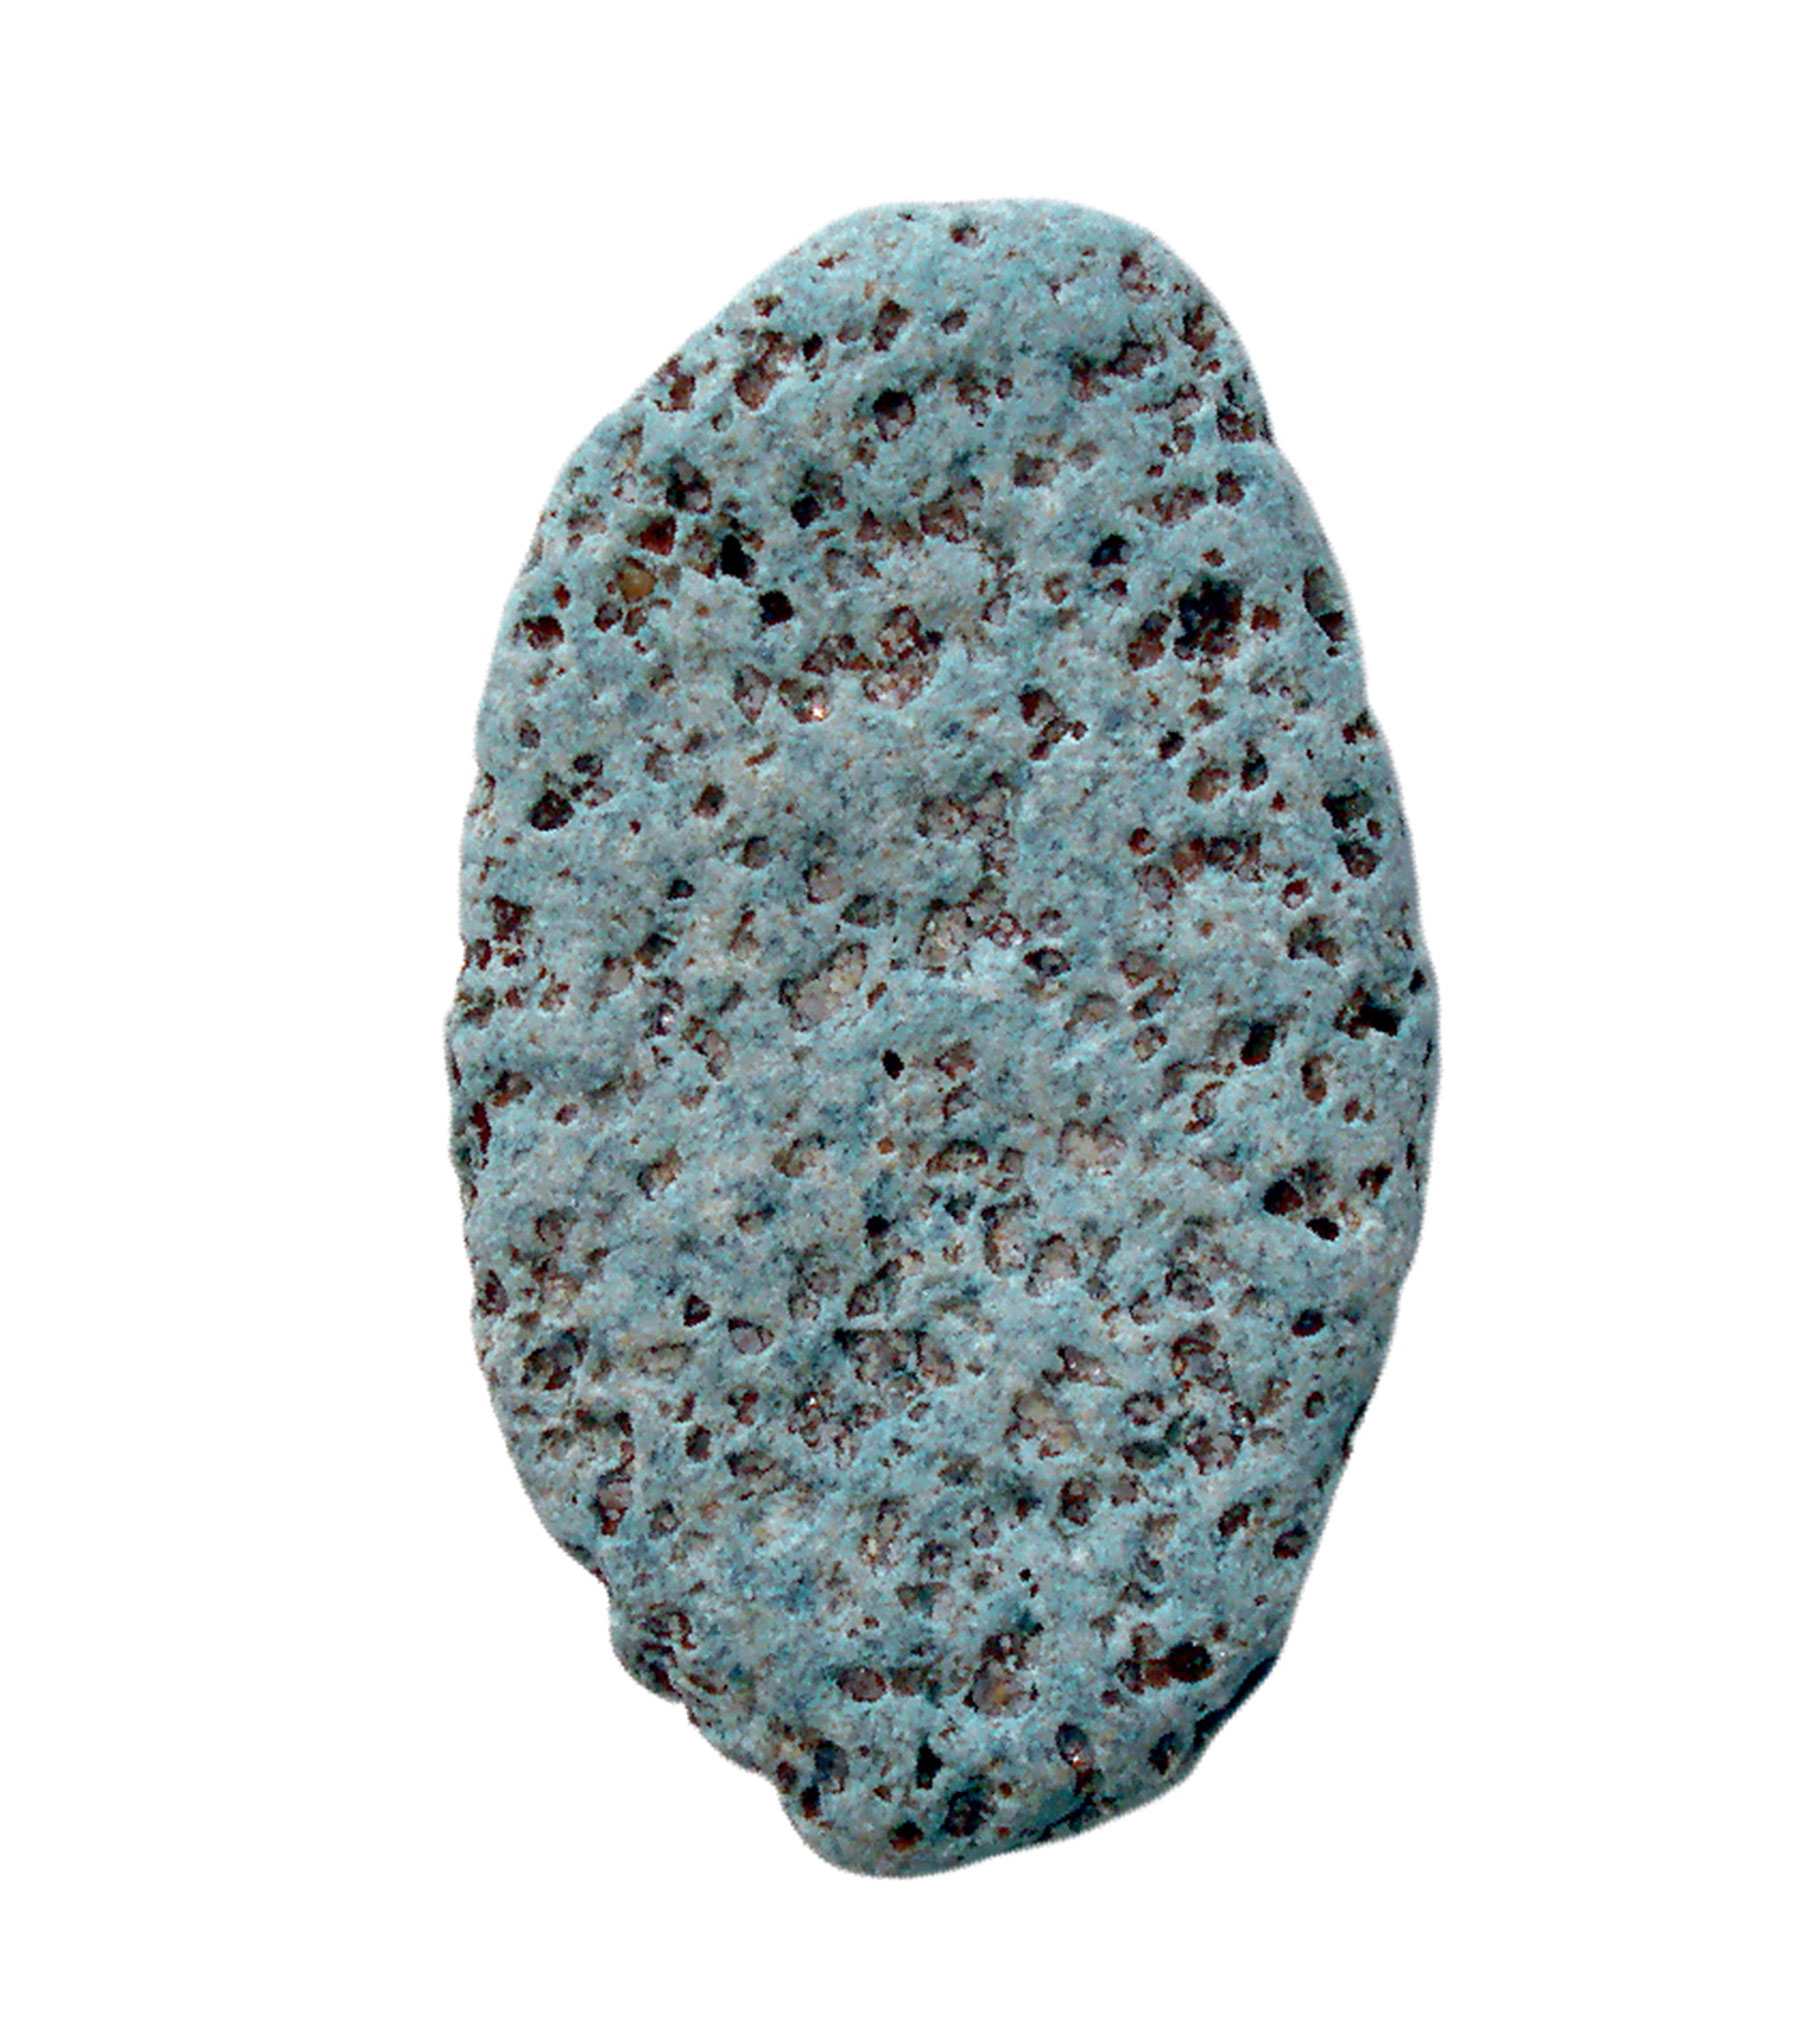 A photograph of a rock which resembles a sponge. 